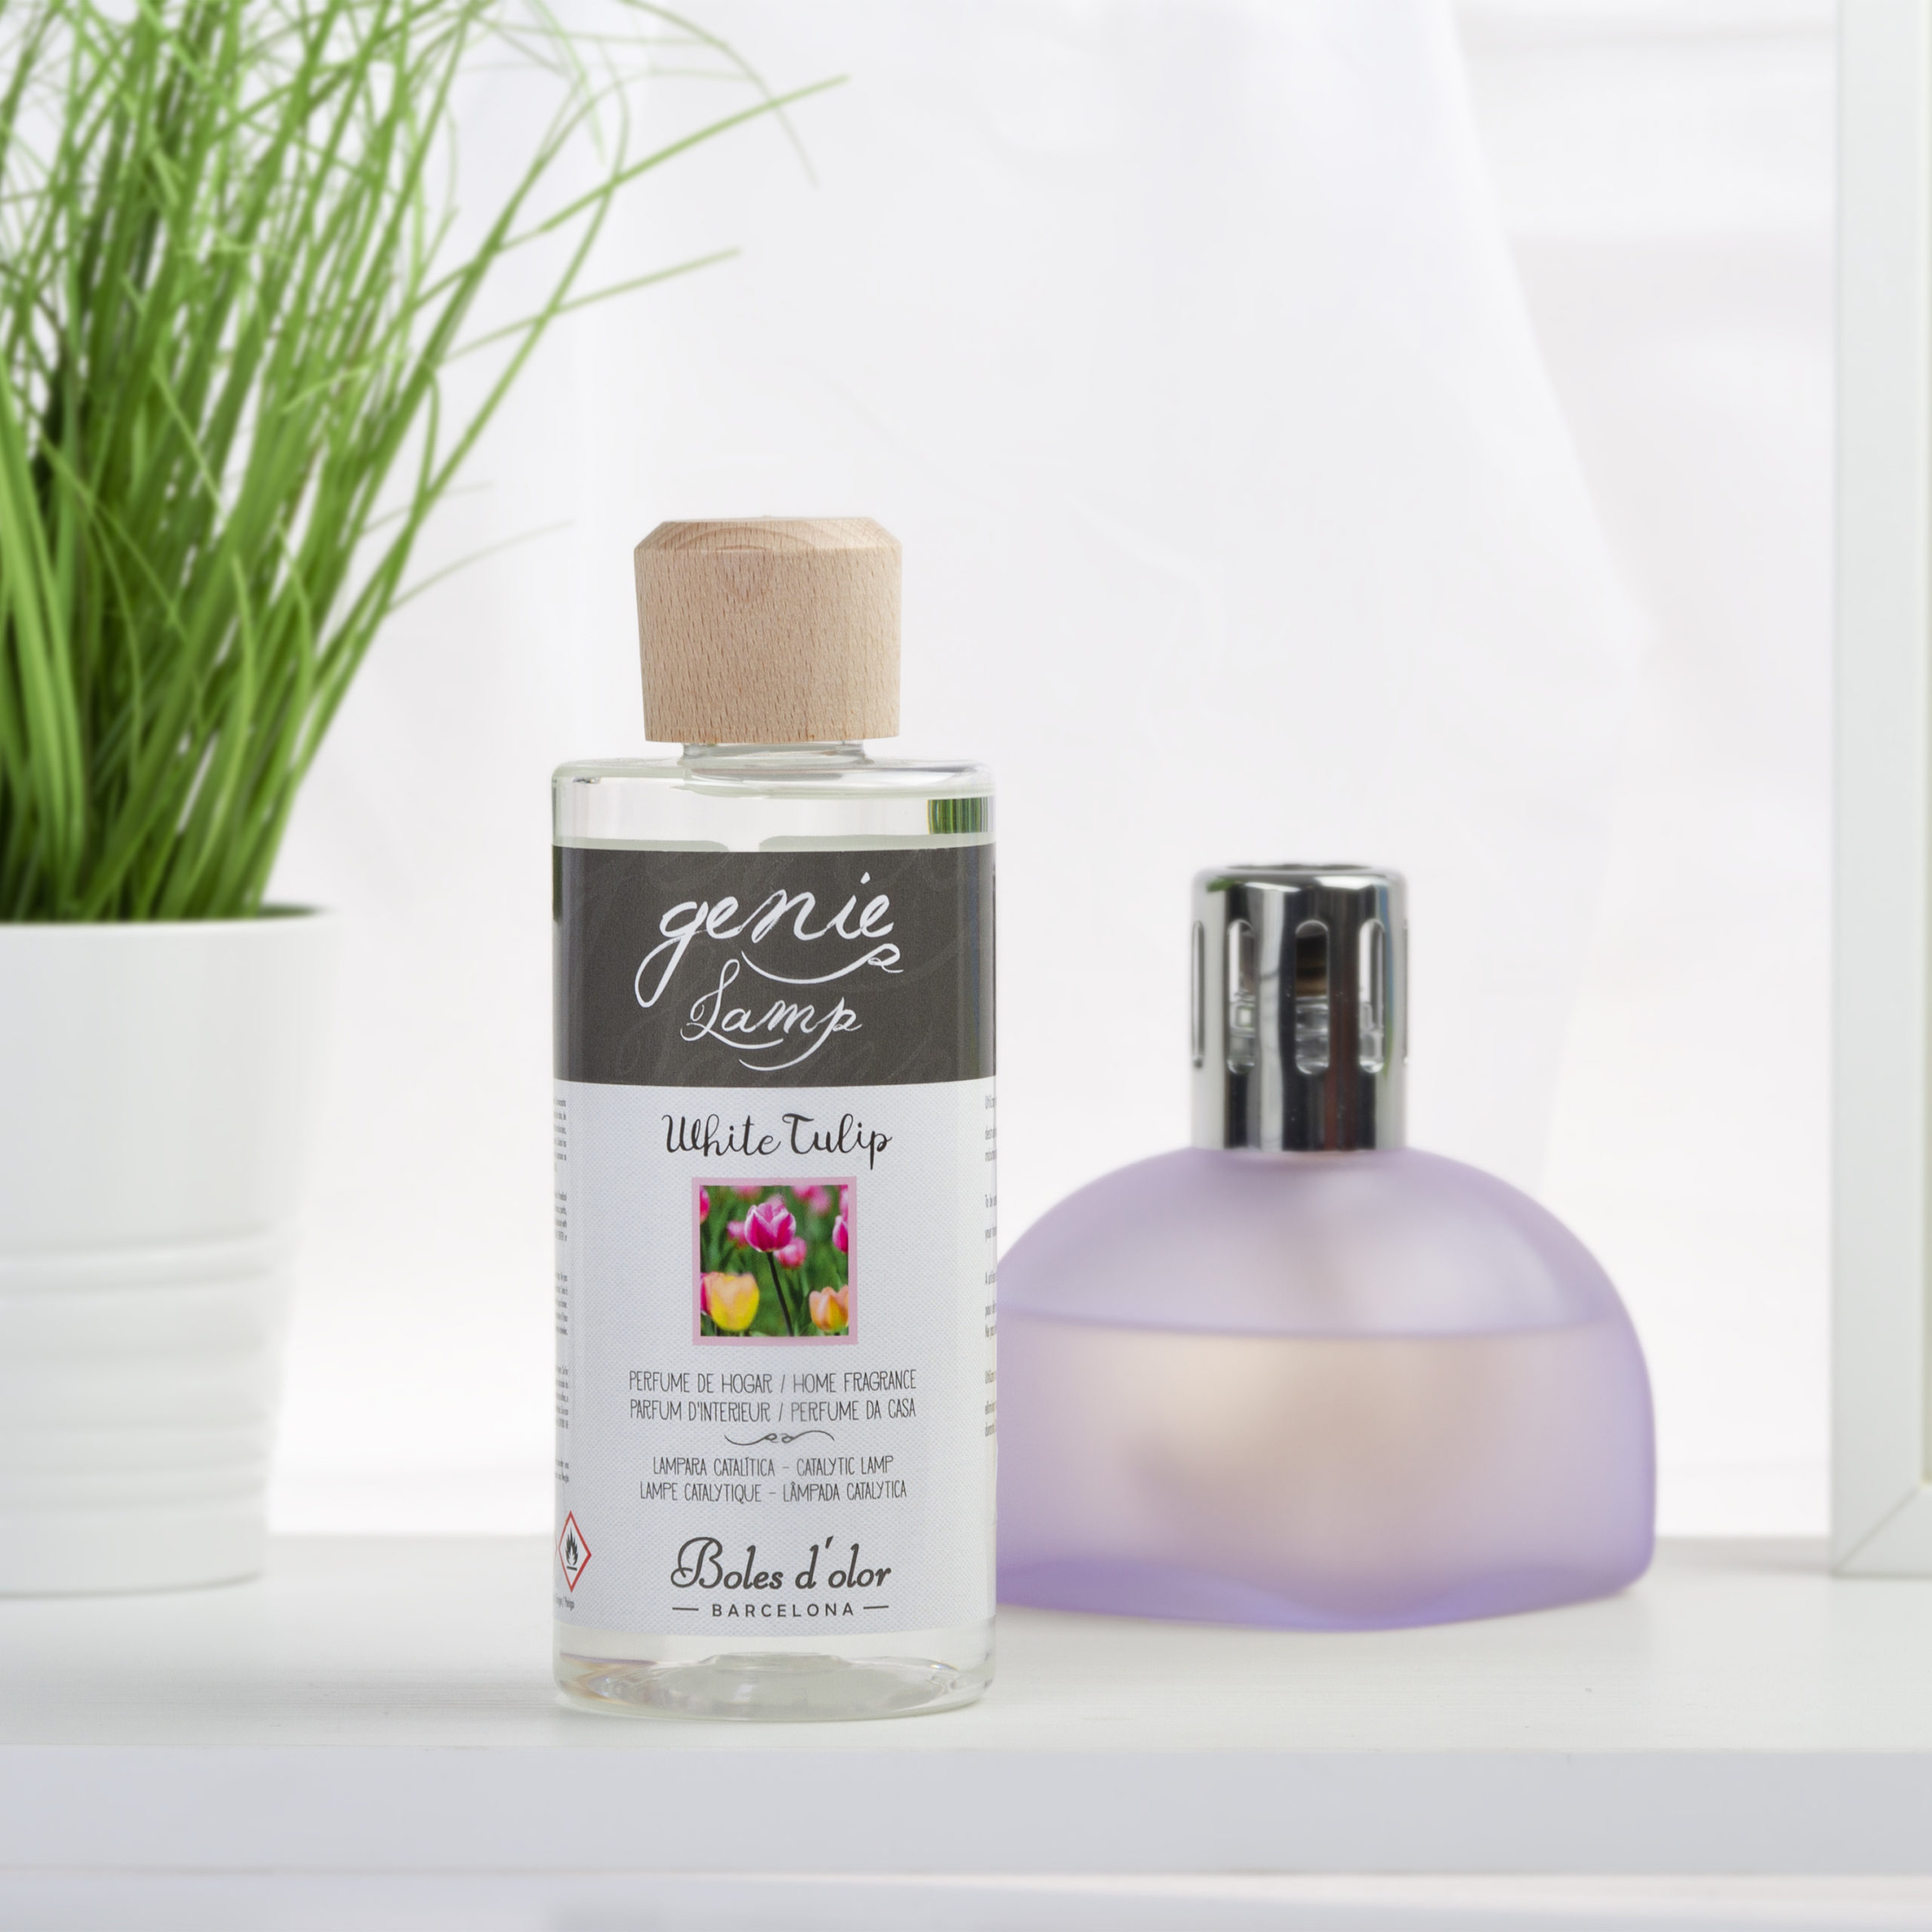 Boles d'olor-Perfume Genie Lamp Angels Charm 500ml.